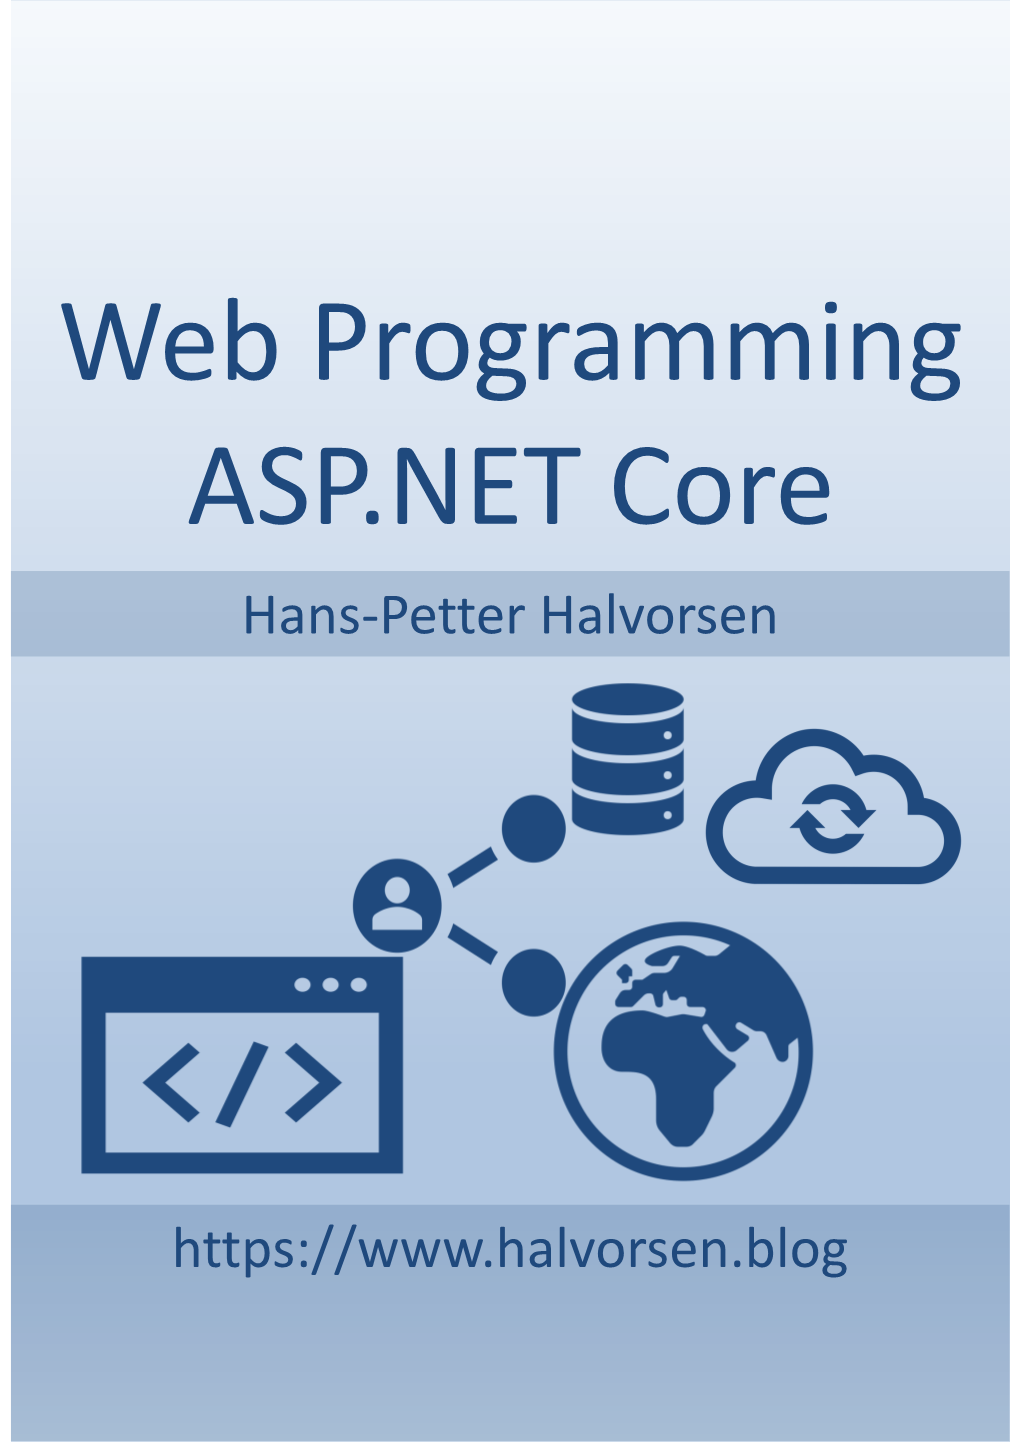 Web Programming ASP.NET Core Hans-Petter Halvorsen